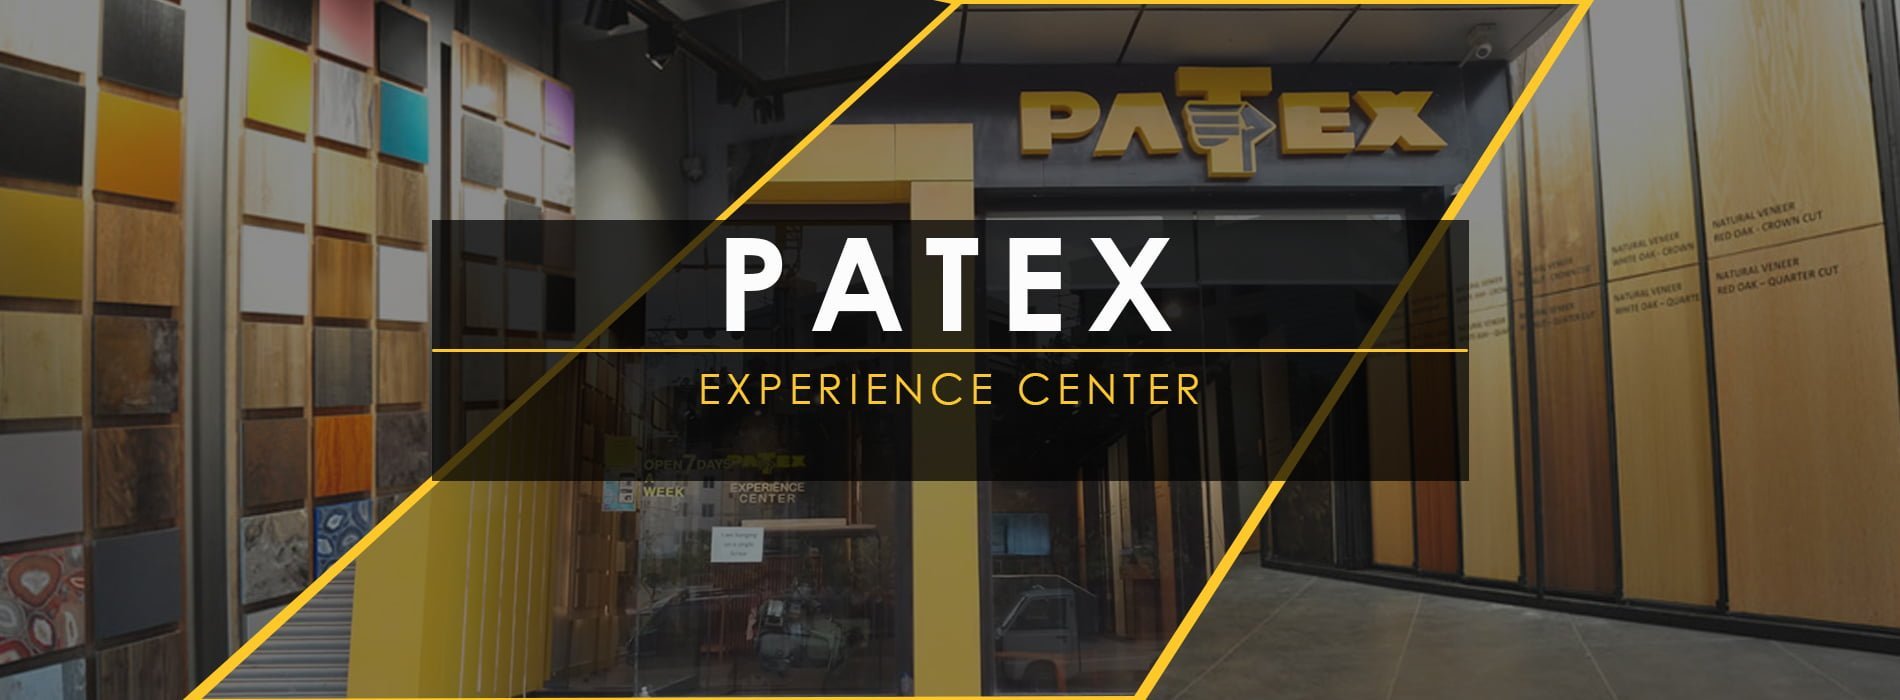 Patex experience center